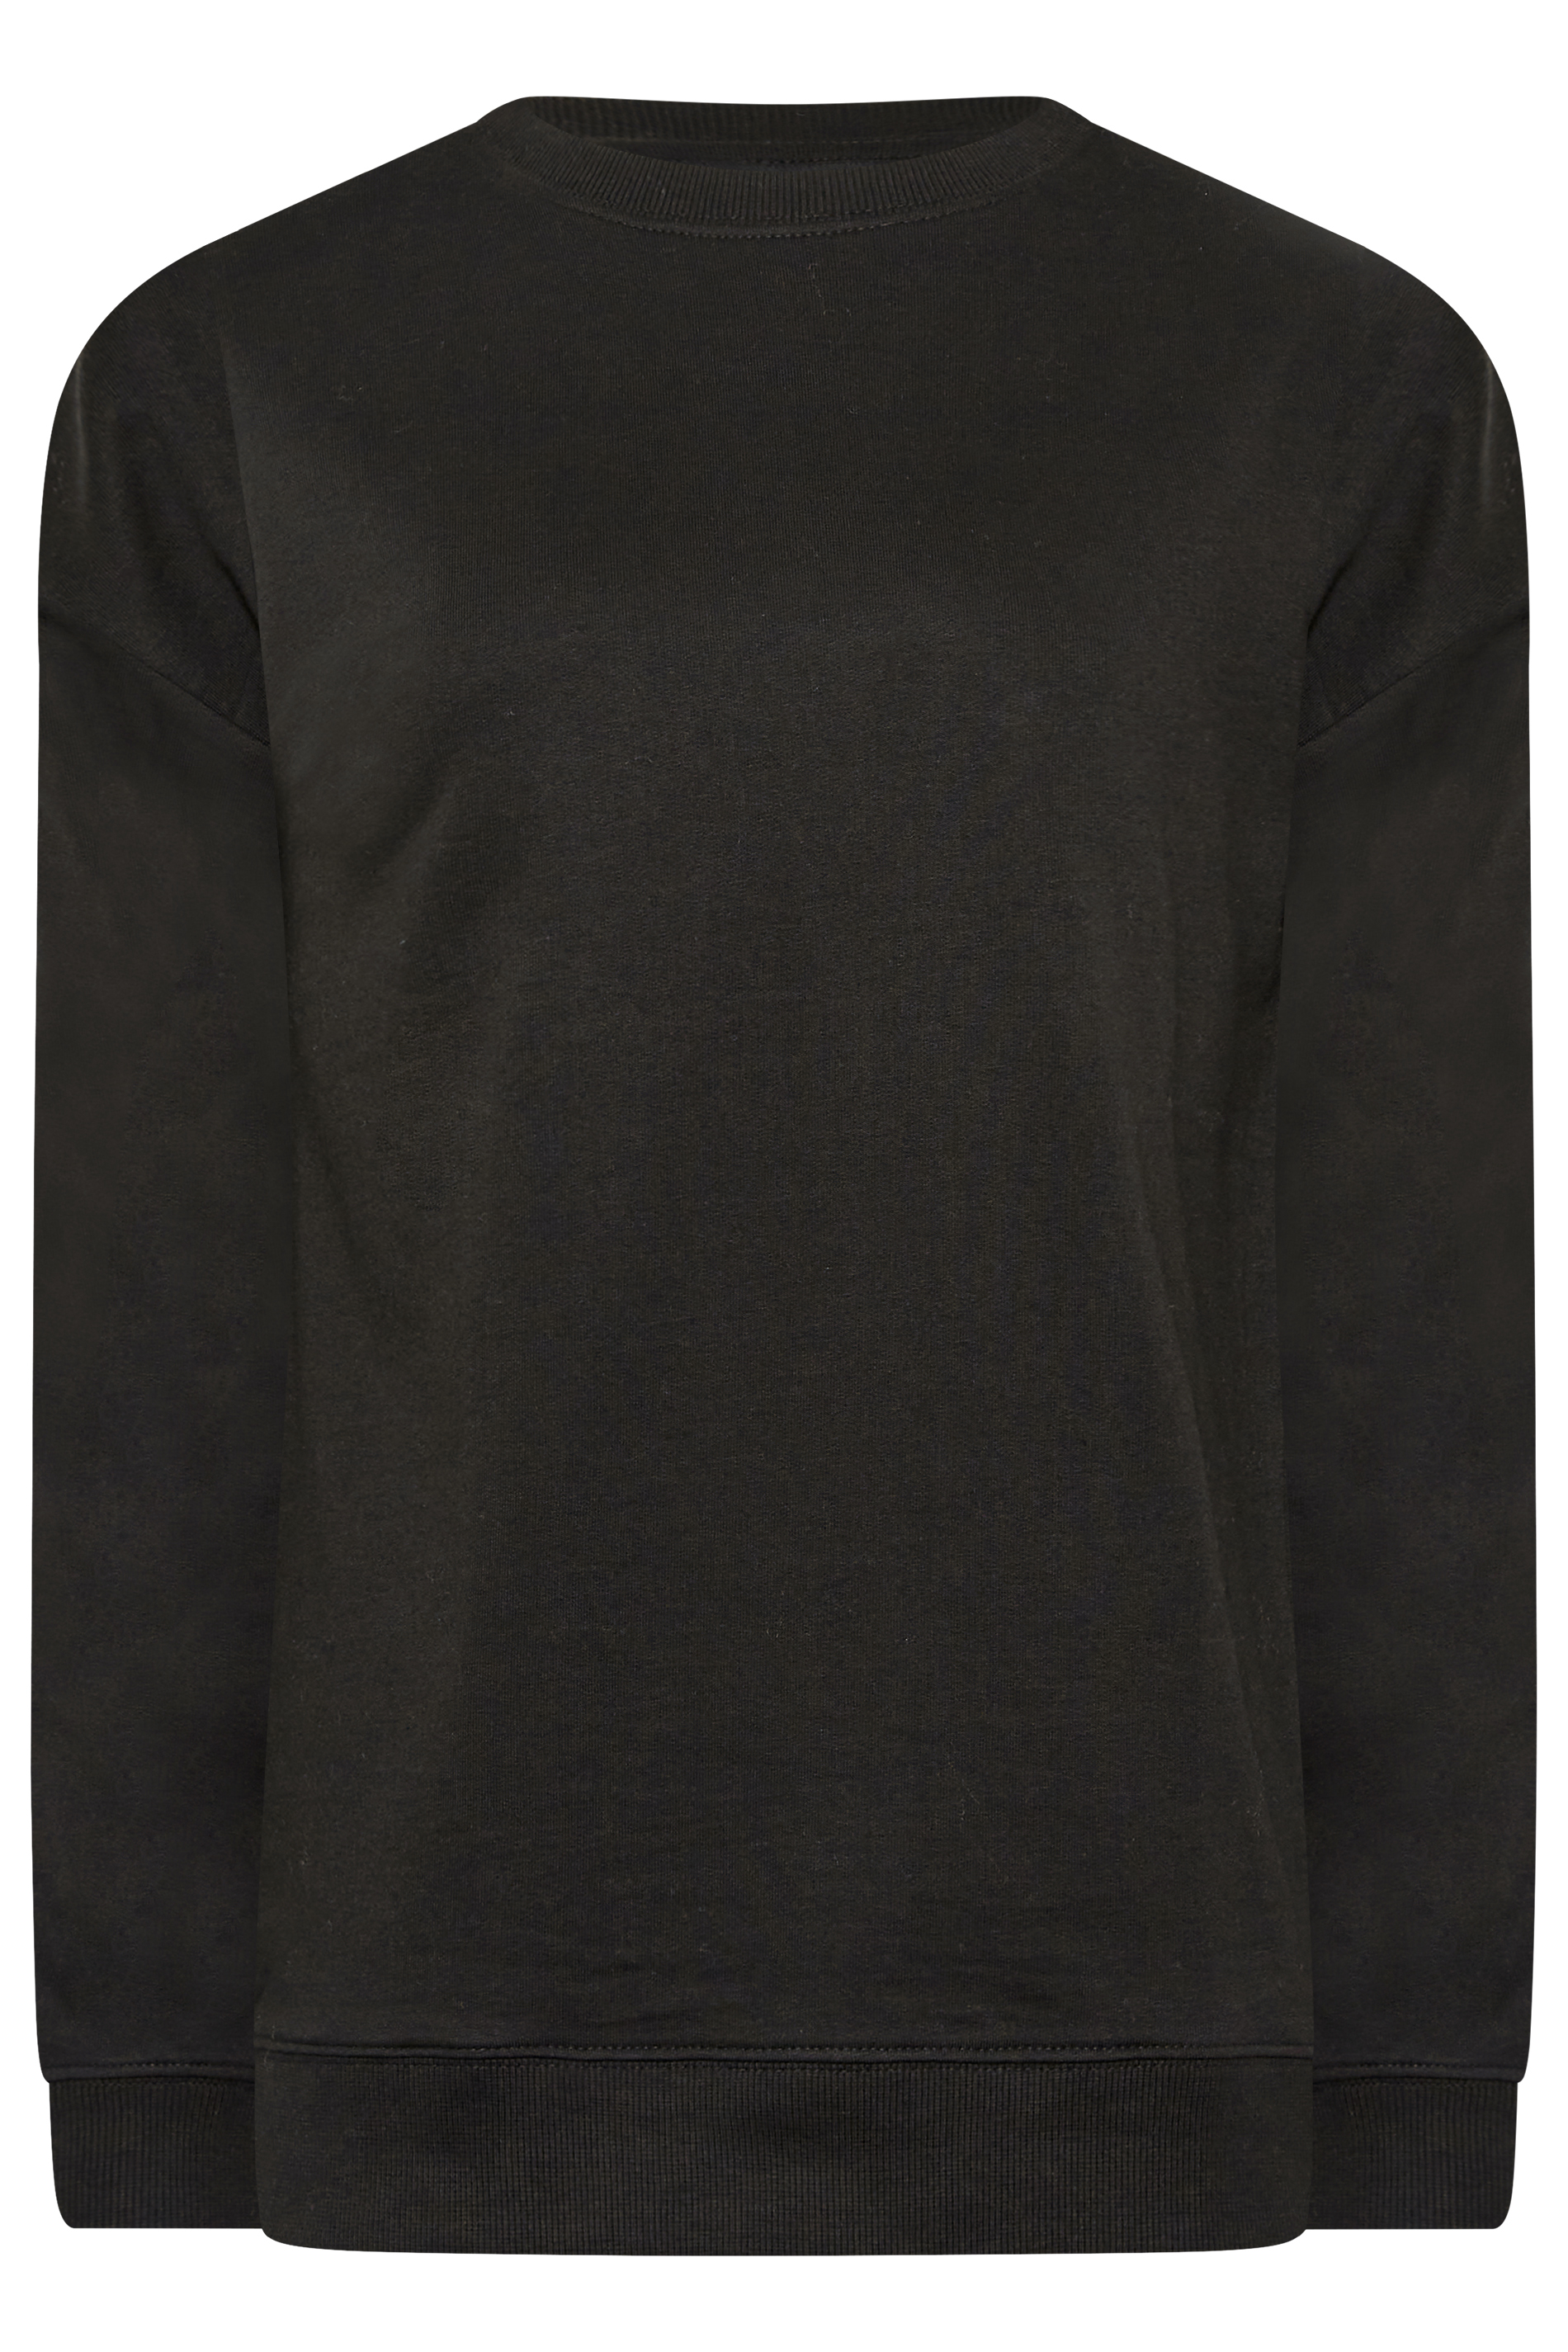 LTS Tall Black Long Sleeve Sweatshirt | Long Tall Sally  2